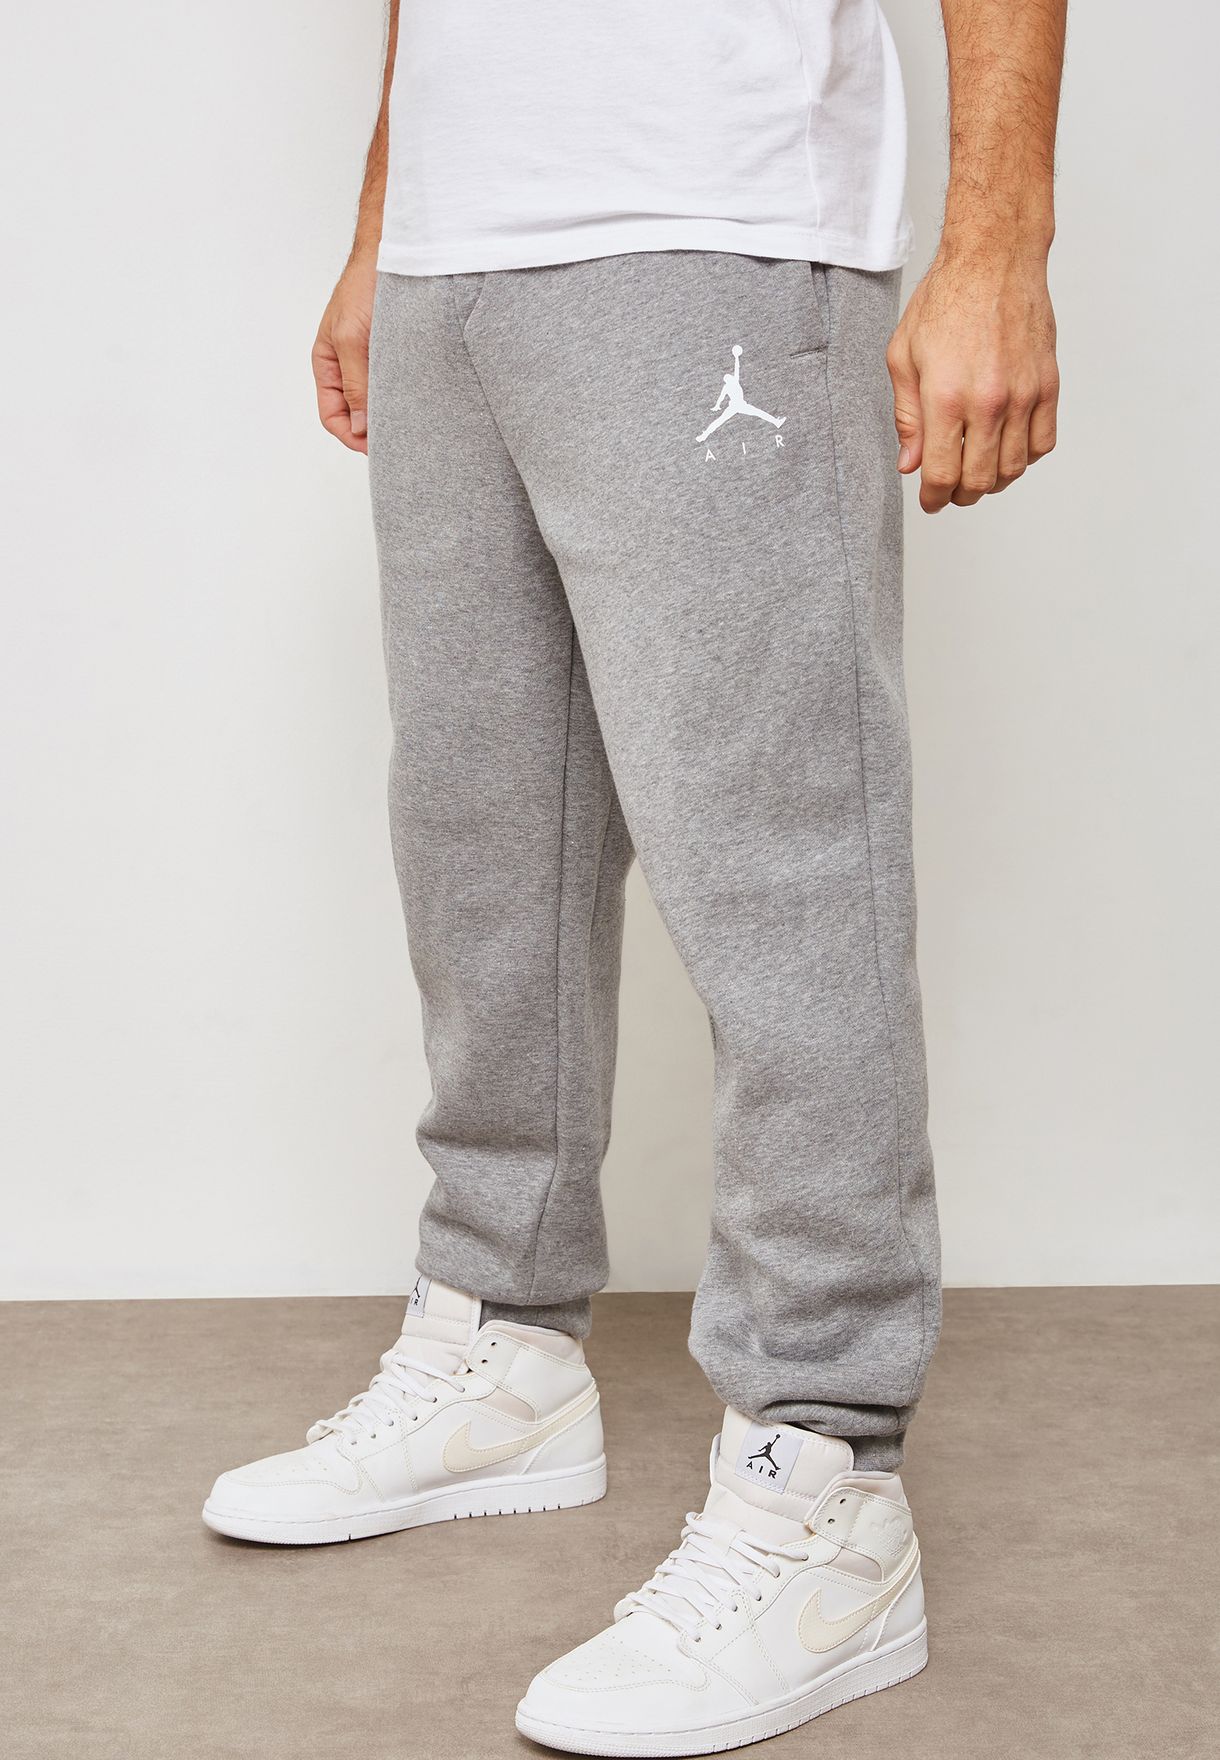 grey jordan sweatpants Cheaper Than 